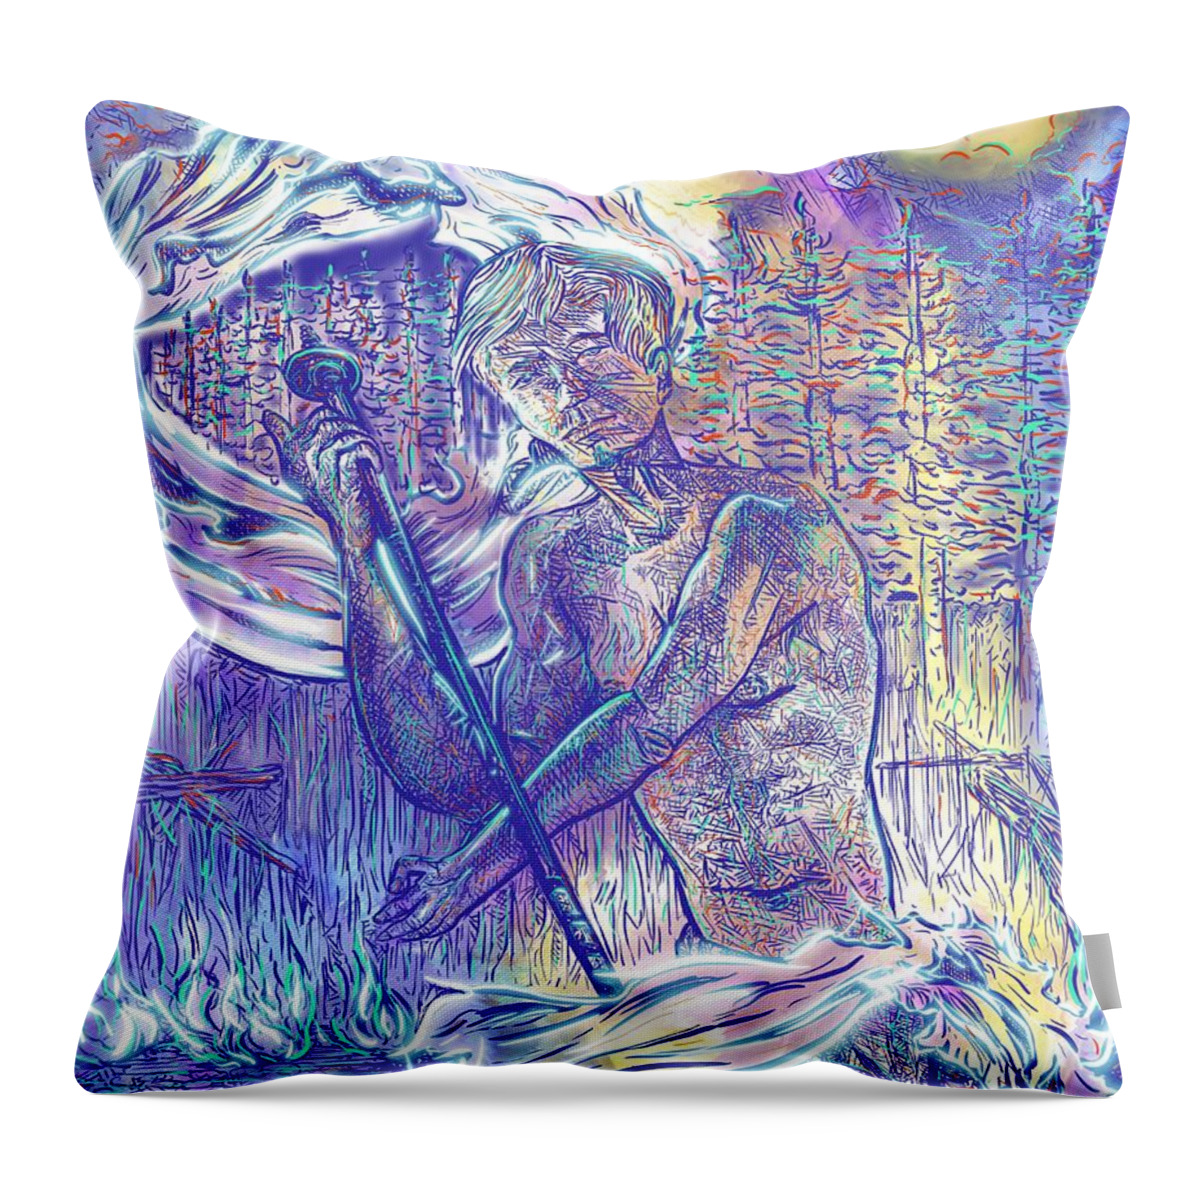 Lightworker Throw Pillow featuring the digital art Lightworker by Angela Weddle